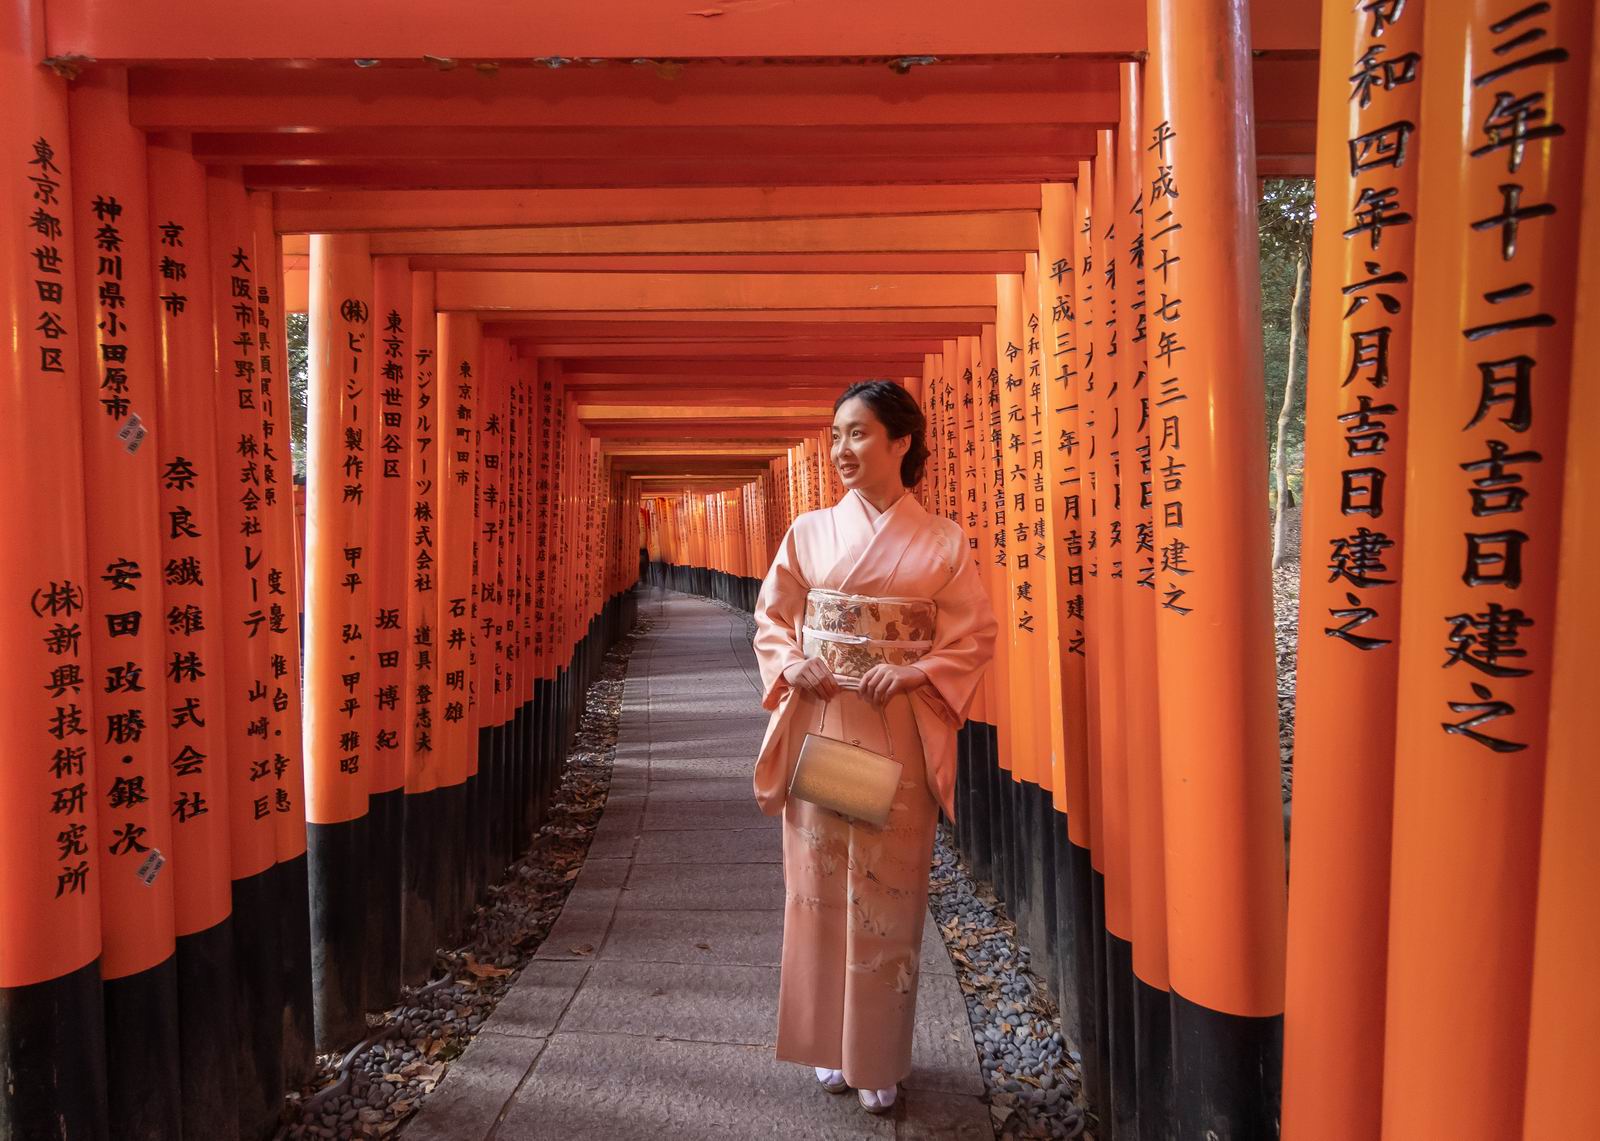 012_Shrine Gates Kyoto.jpg